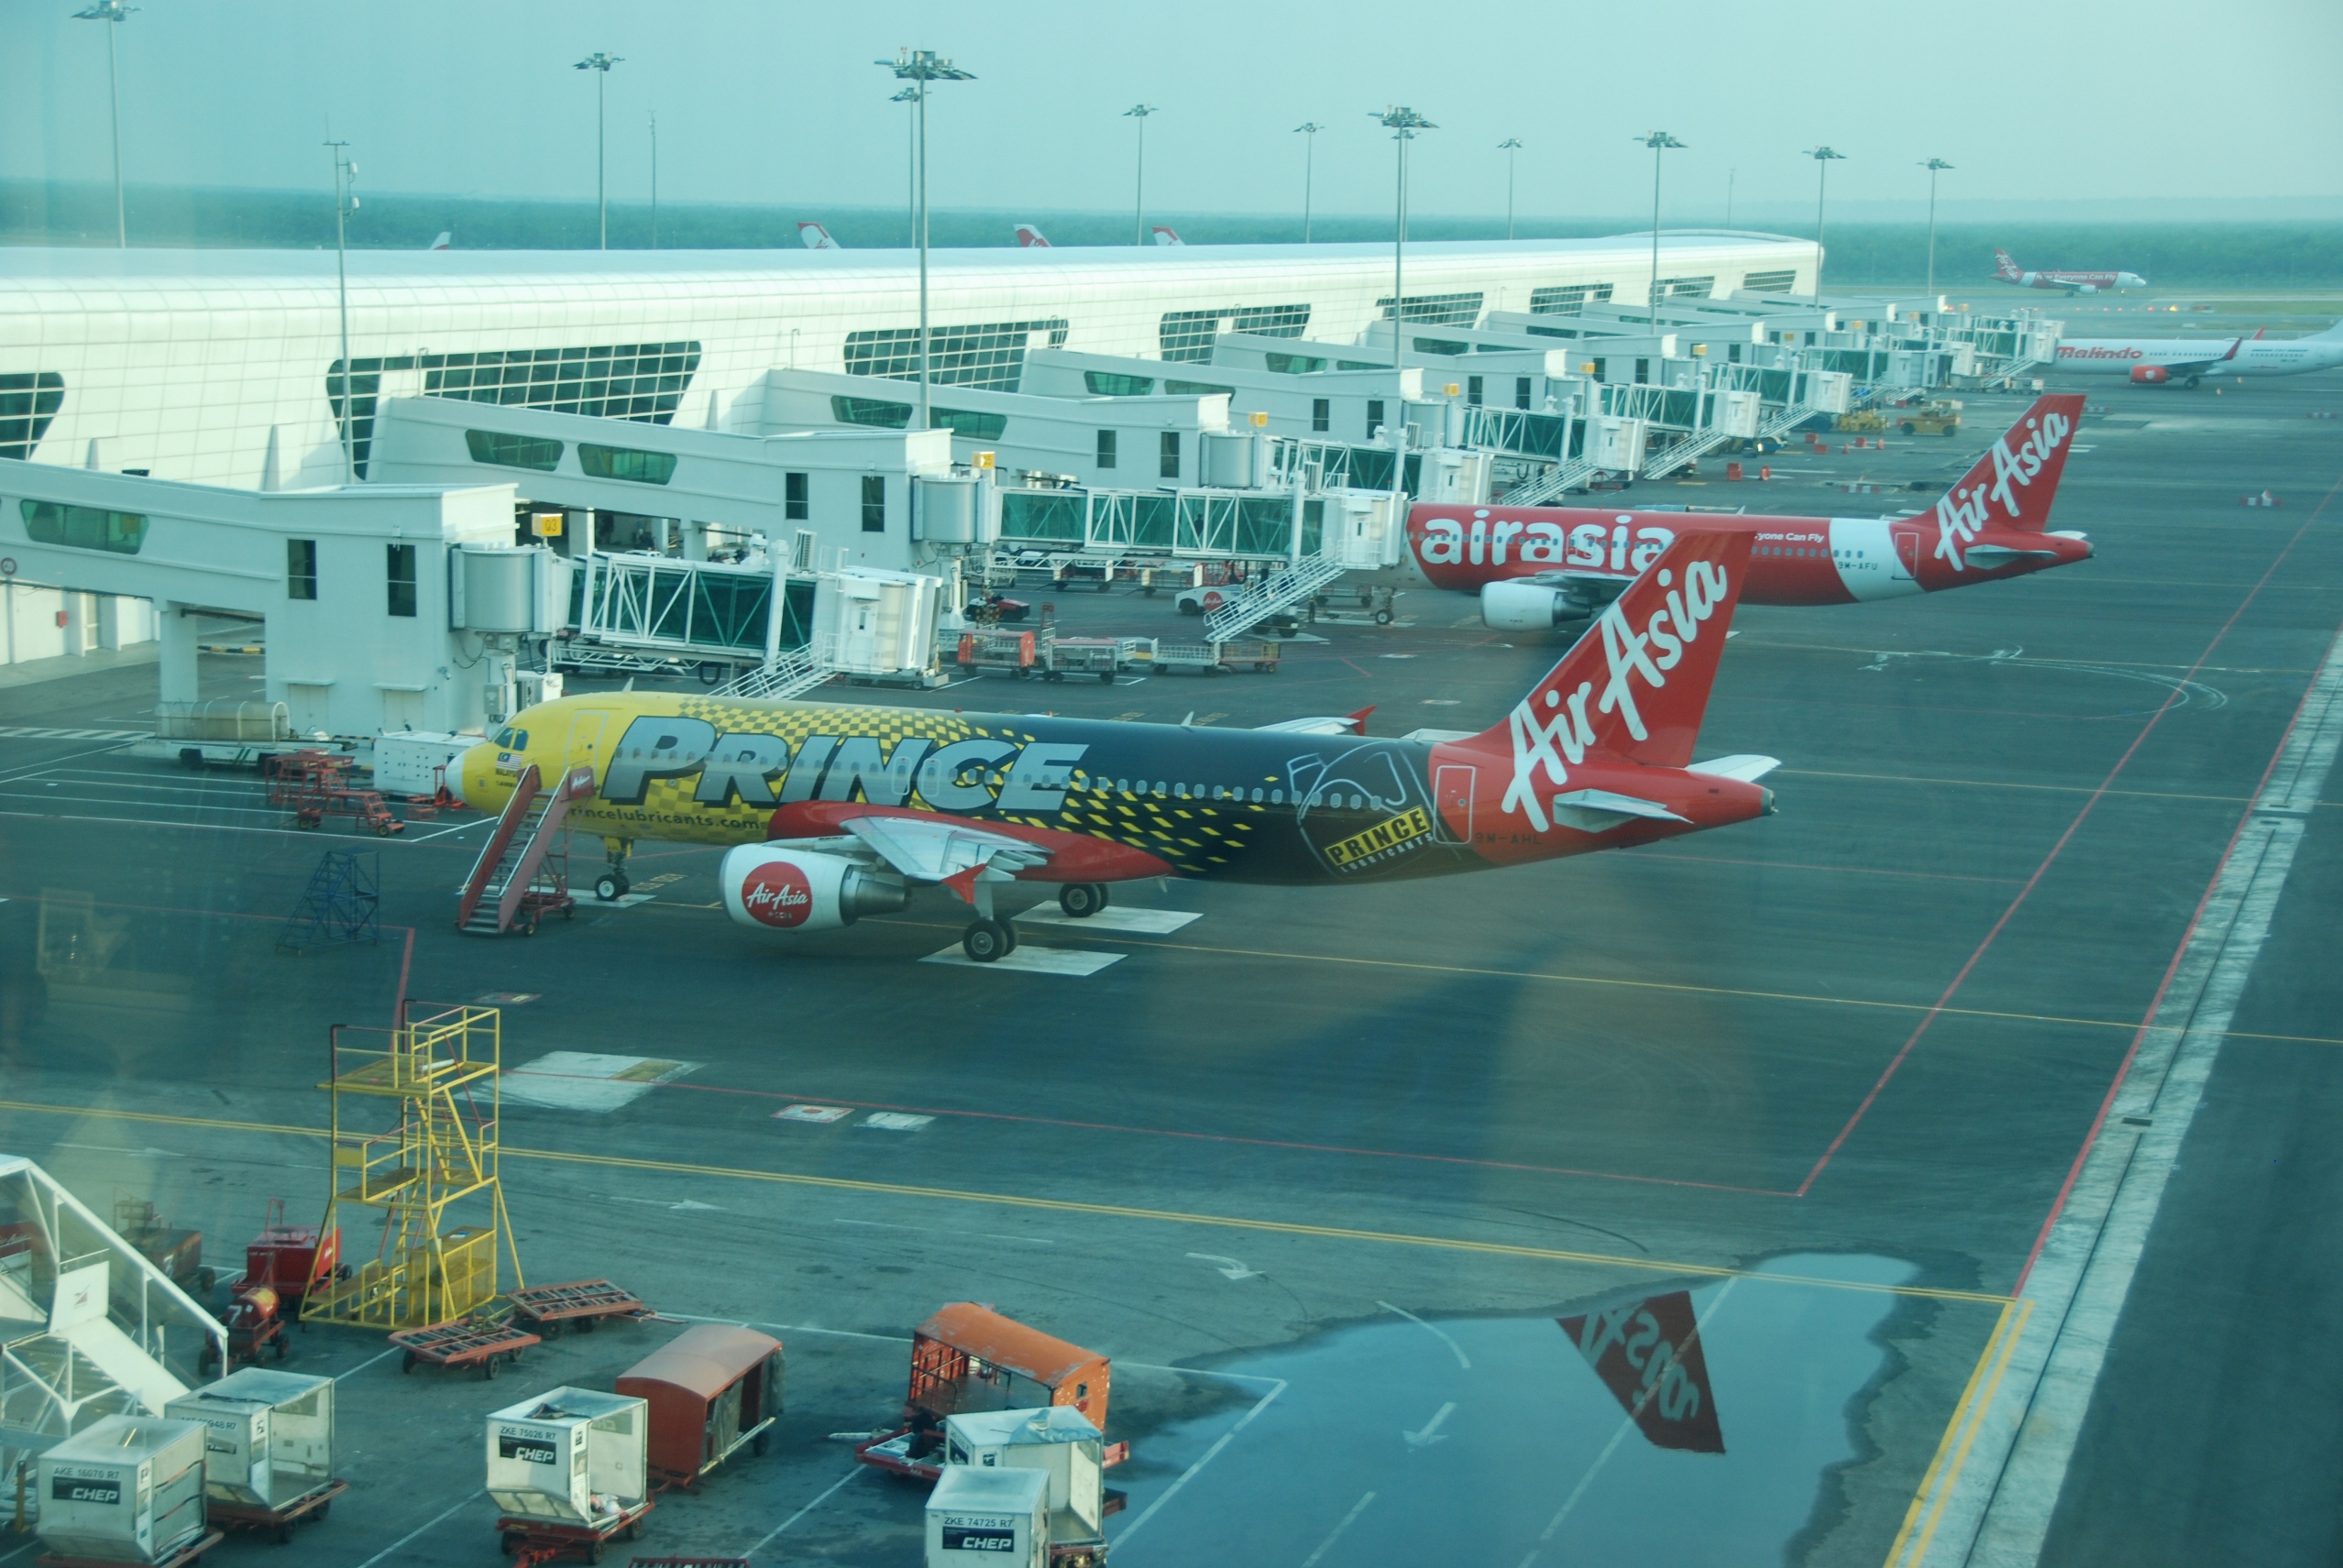 AirAsia Prince Livery Airbus A320 @ Kuala Lumpur Airport